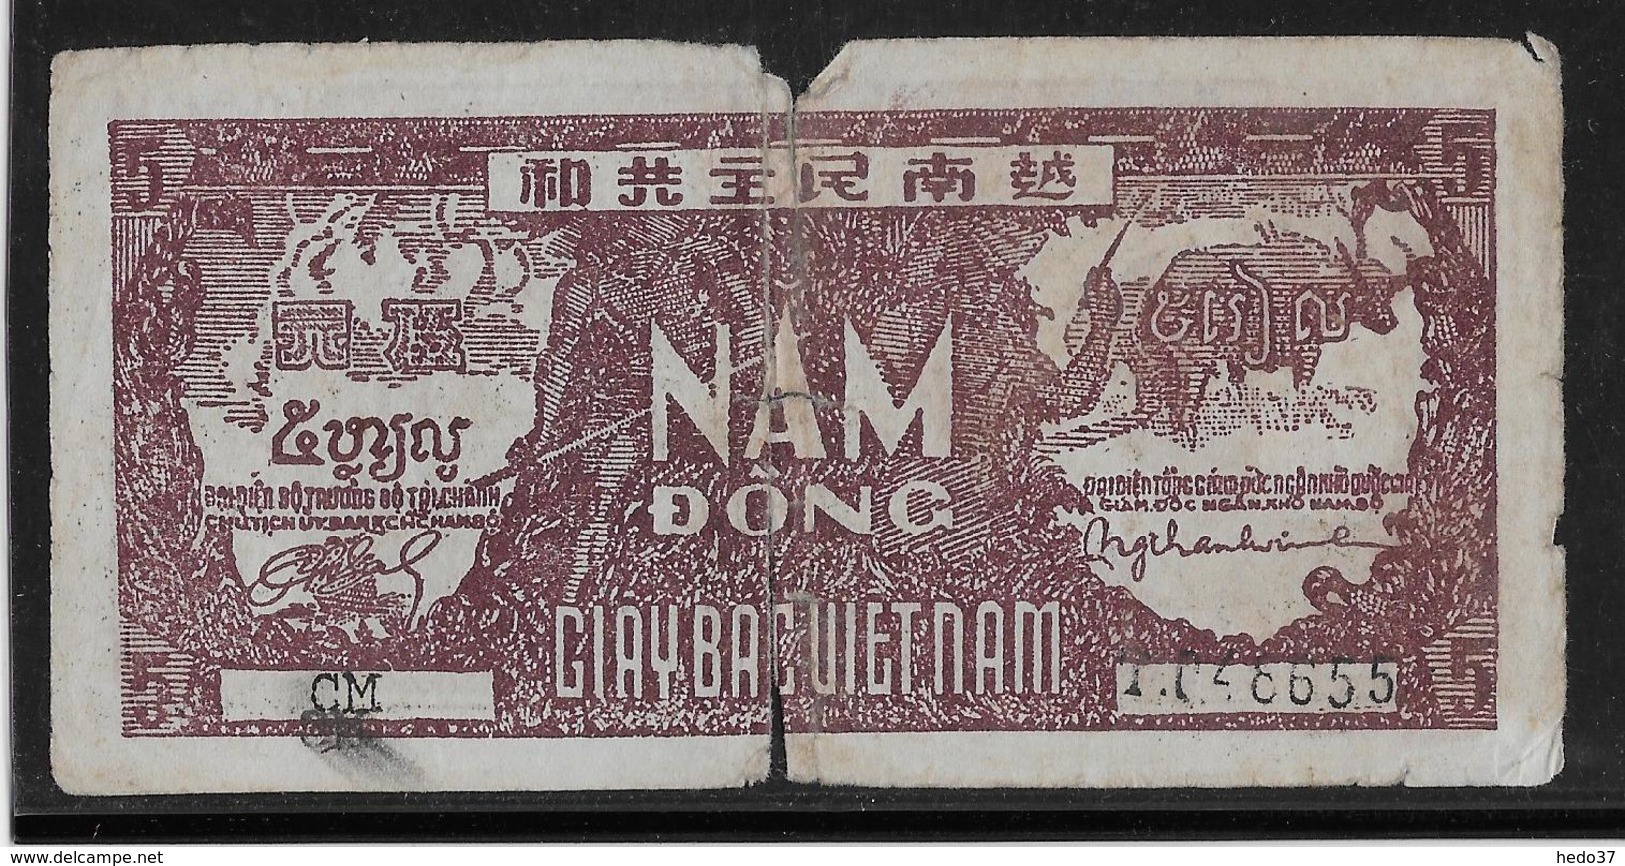 Viêt-Nam - Giay Bac - 5 Döng - 1948 - Pick N°17 - Variété Double "CM" B/TB - Viêt-Nam